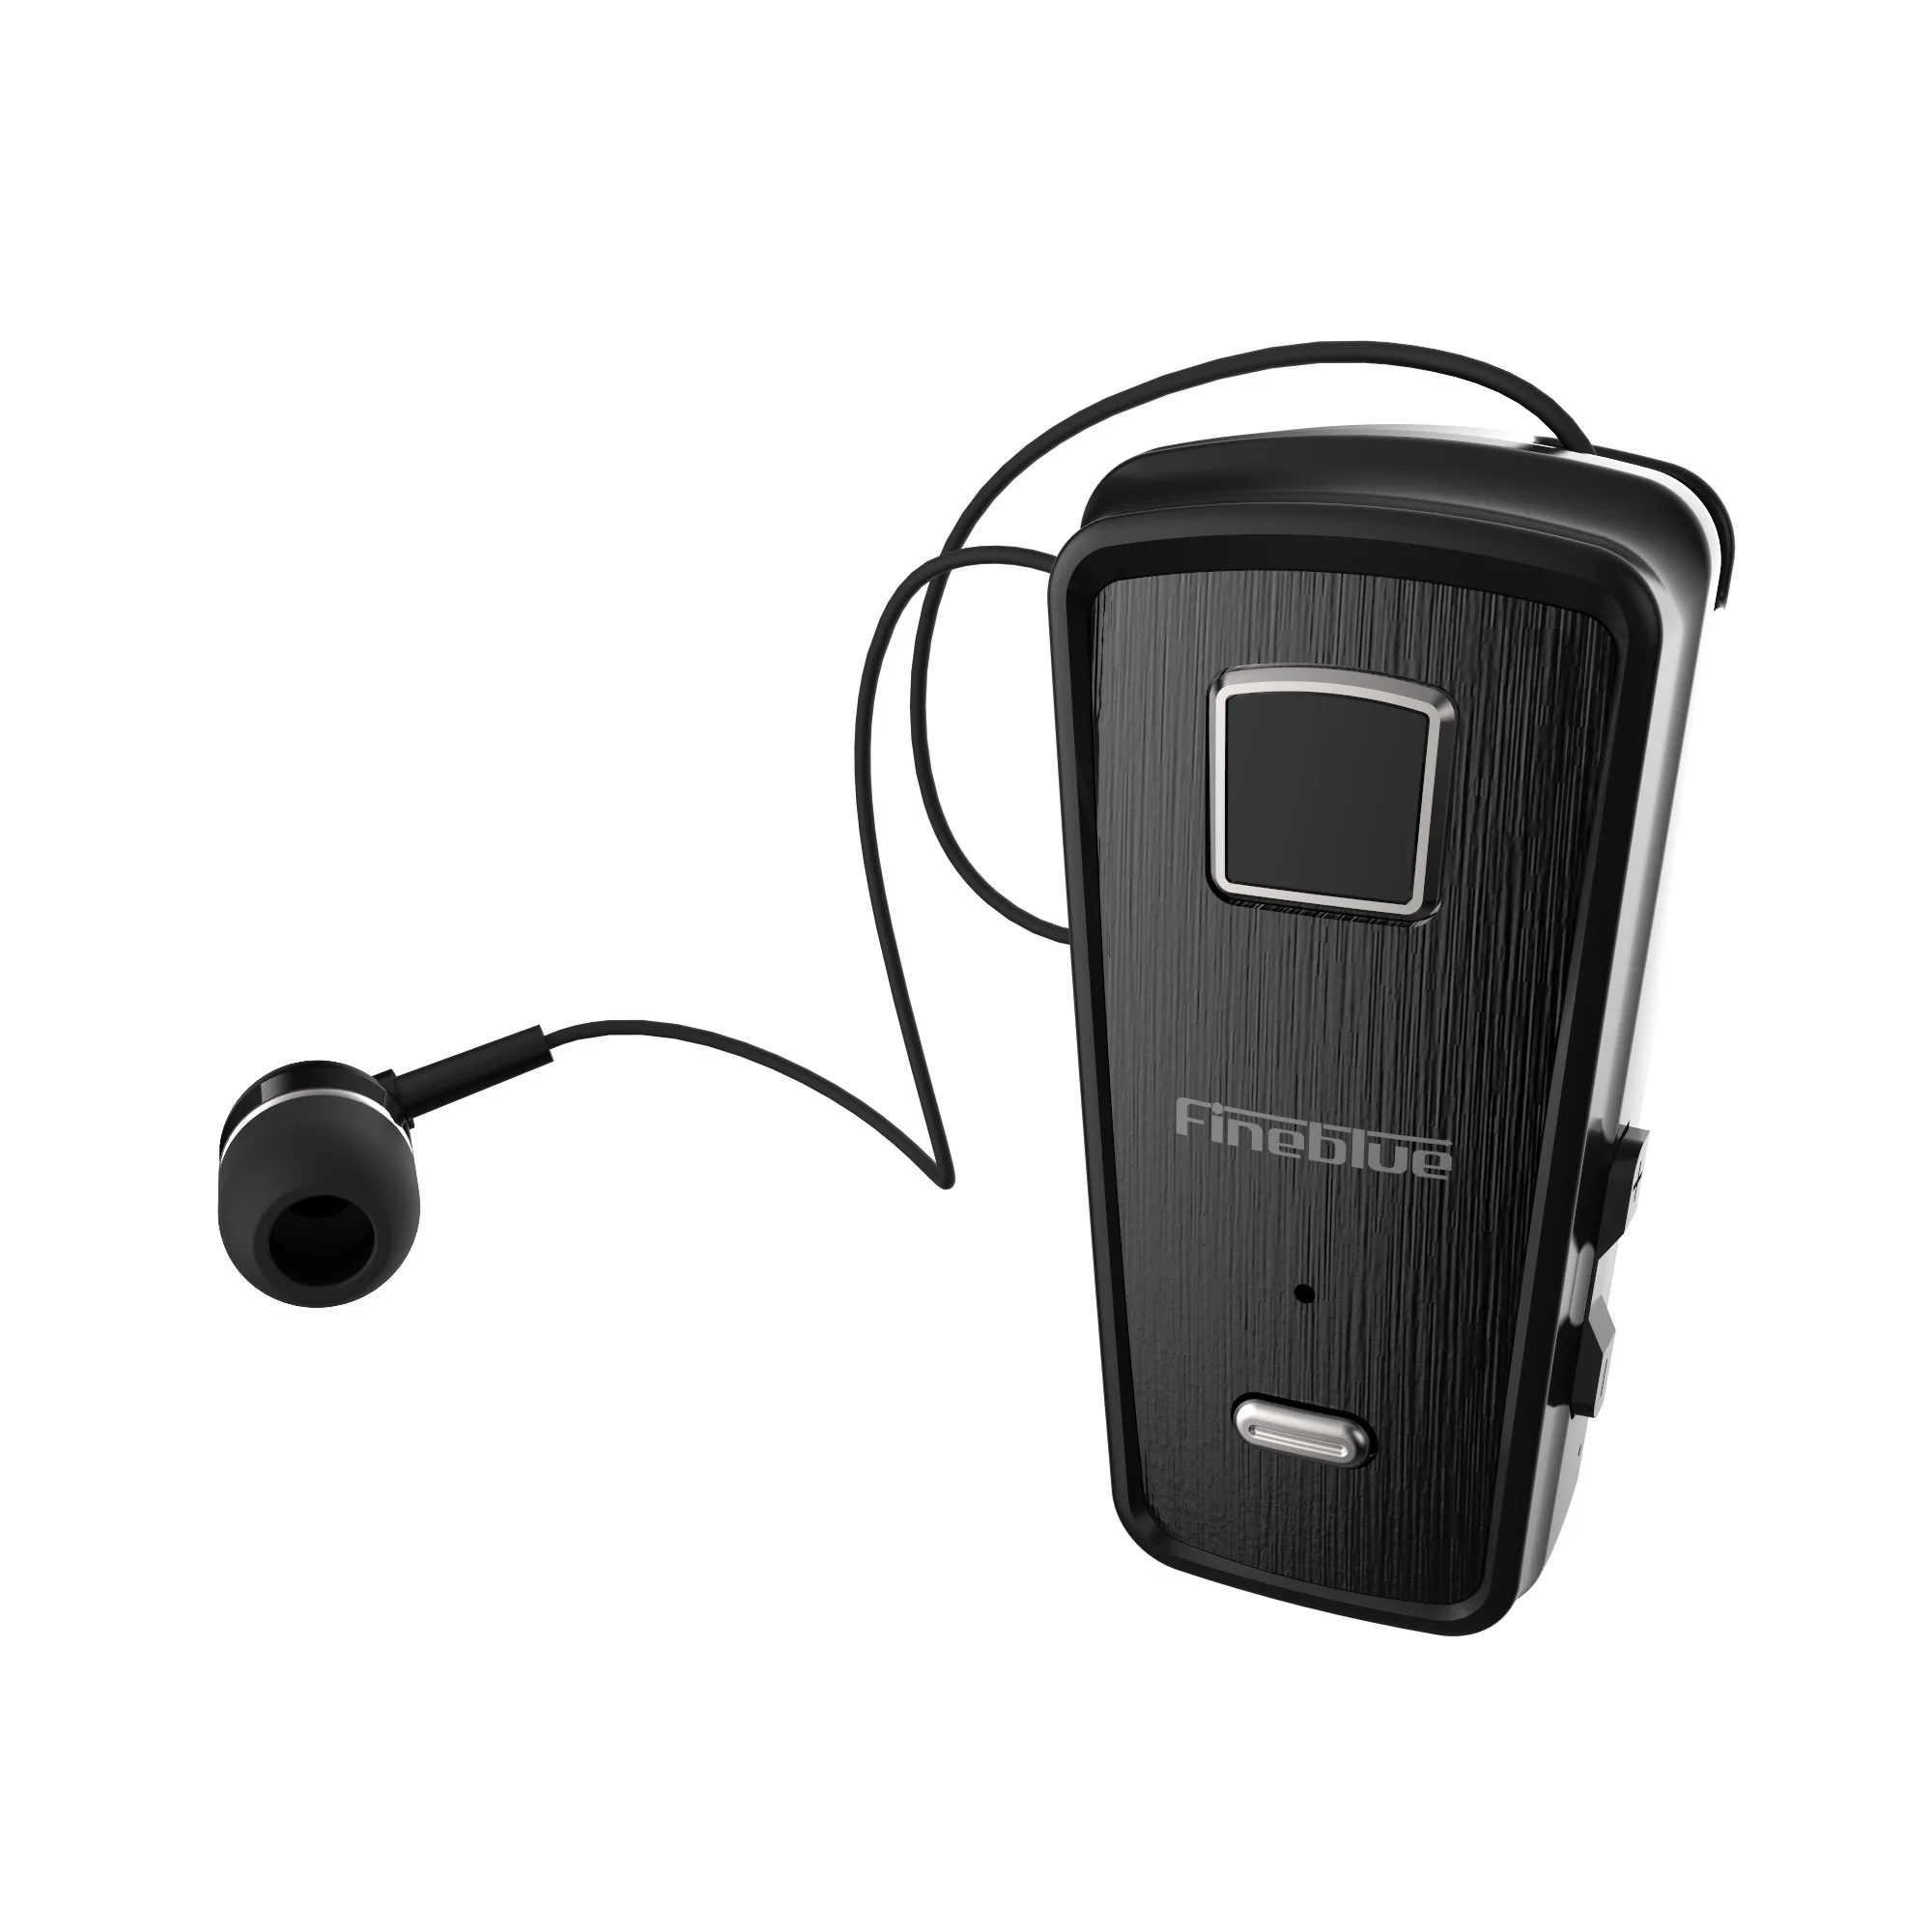 Fineblue F980 5.0 Wireless Bluetooth neck clip telescopic business Earphone Vibration Alert Wear Stereo Sport Auriculares